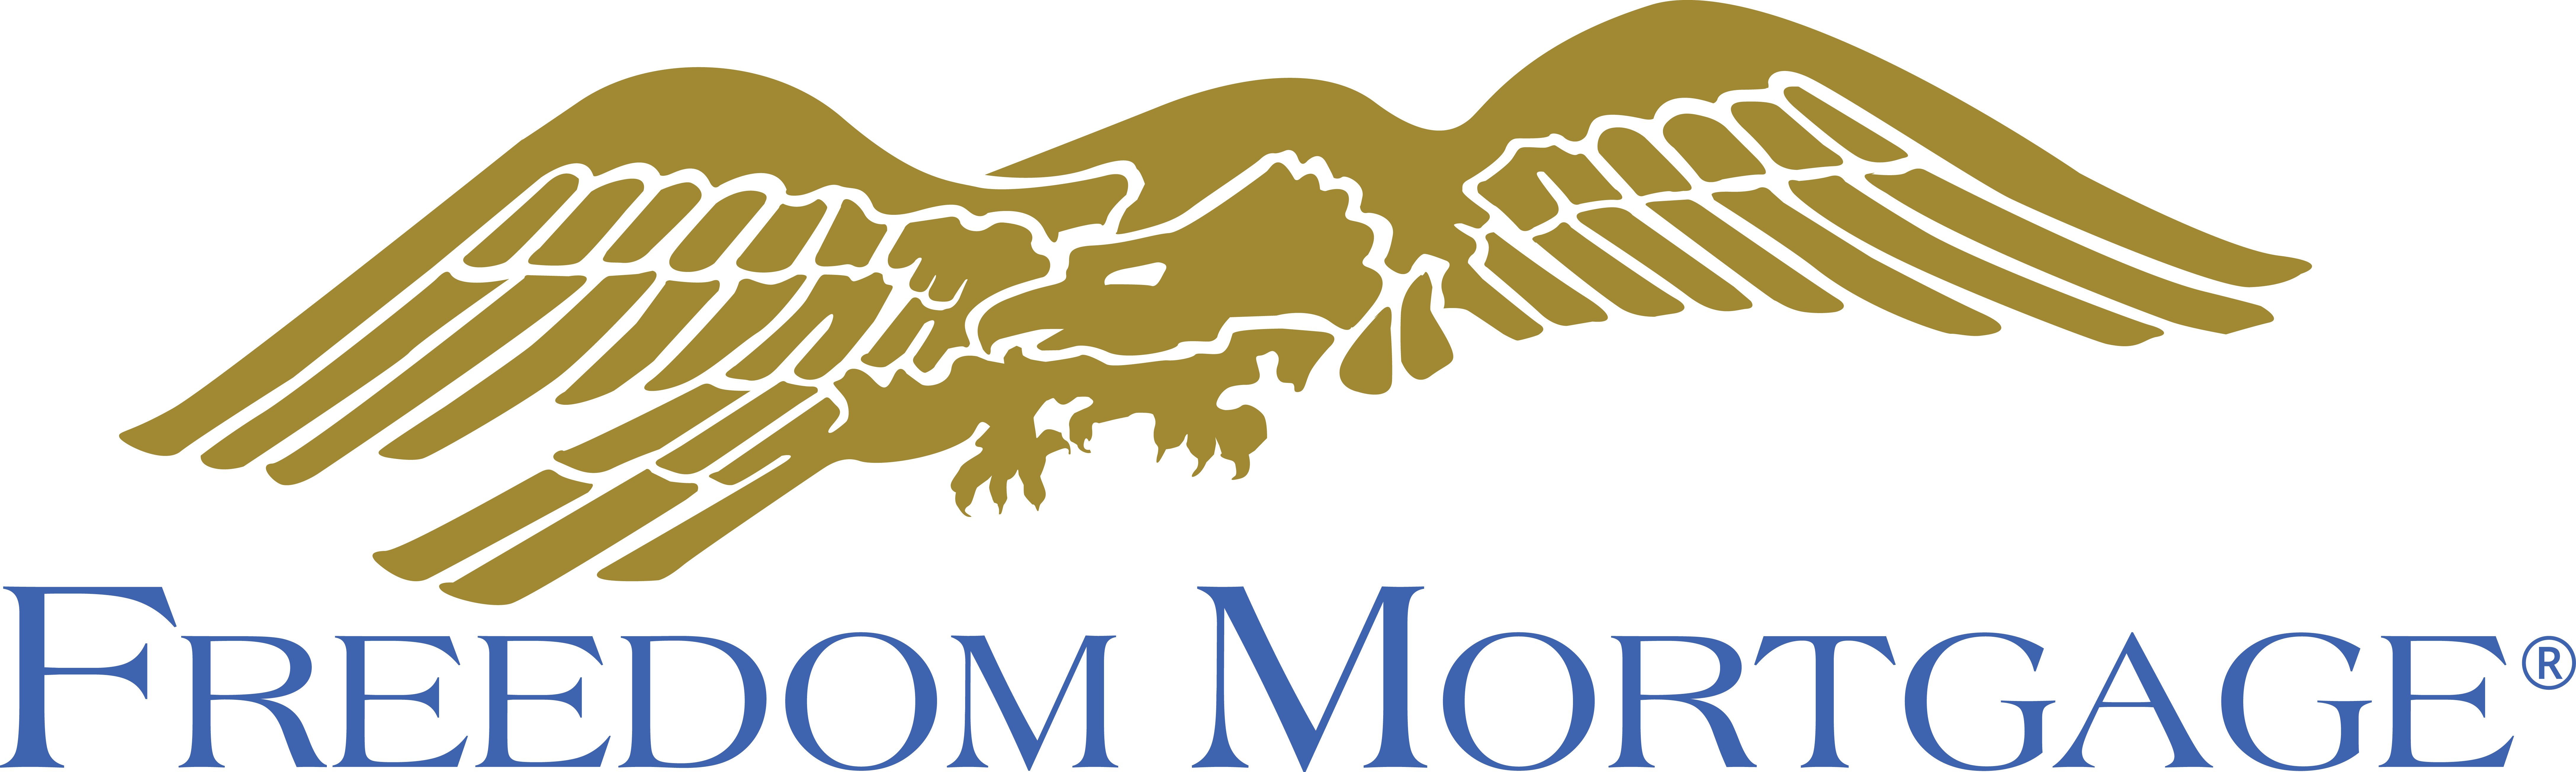 Freedom Mortgage Corporation Company Logo